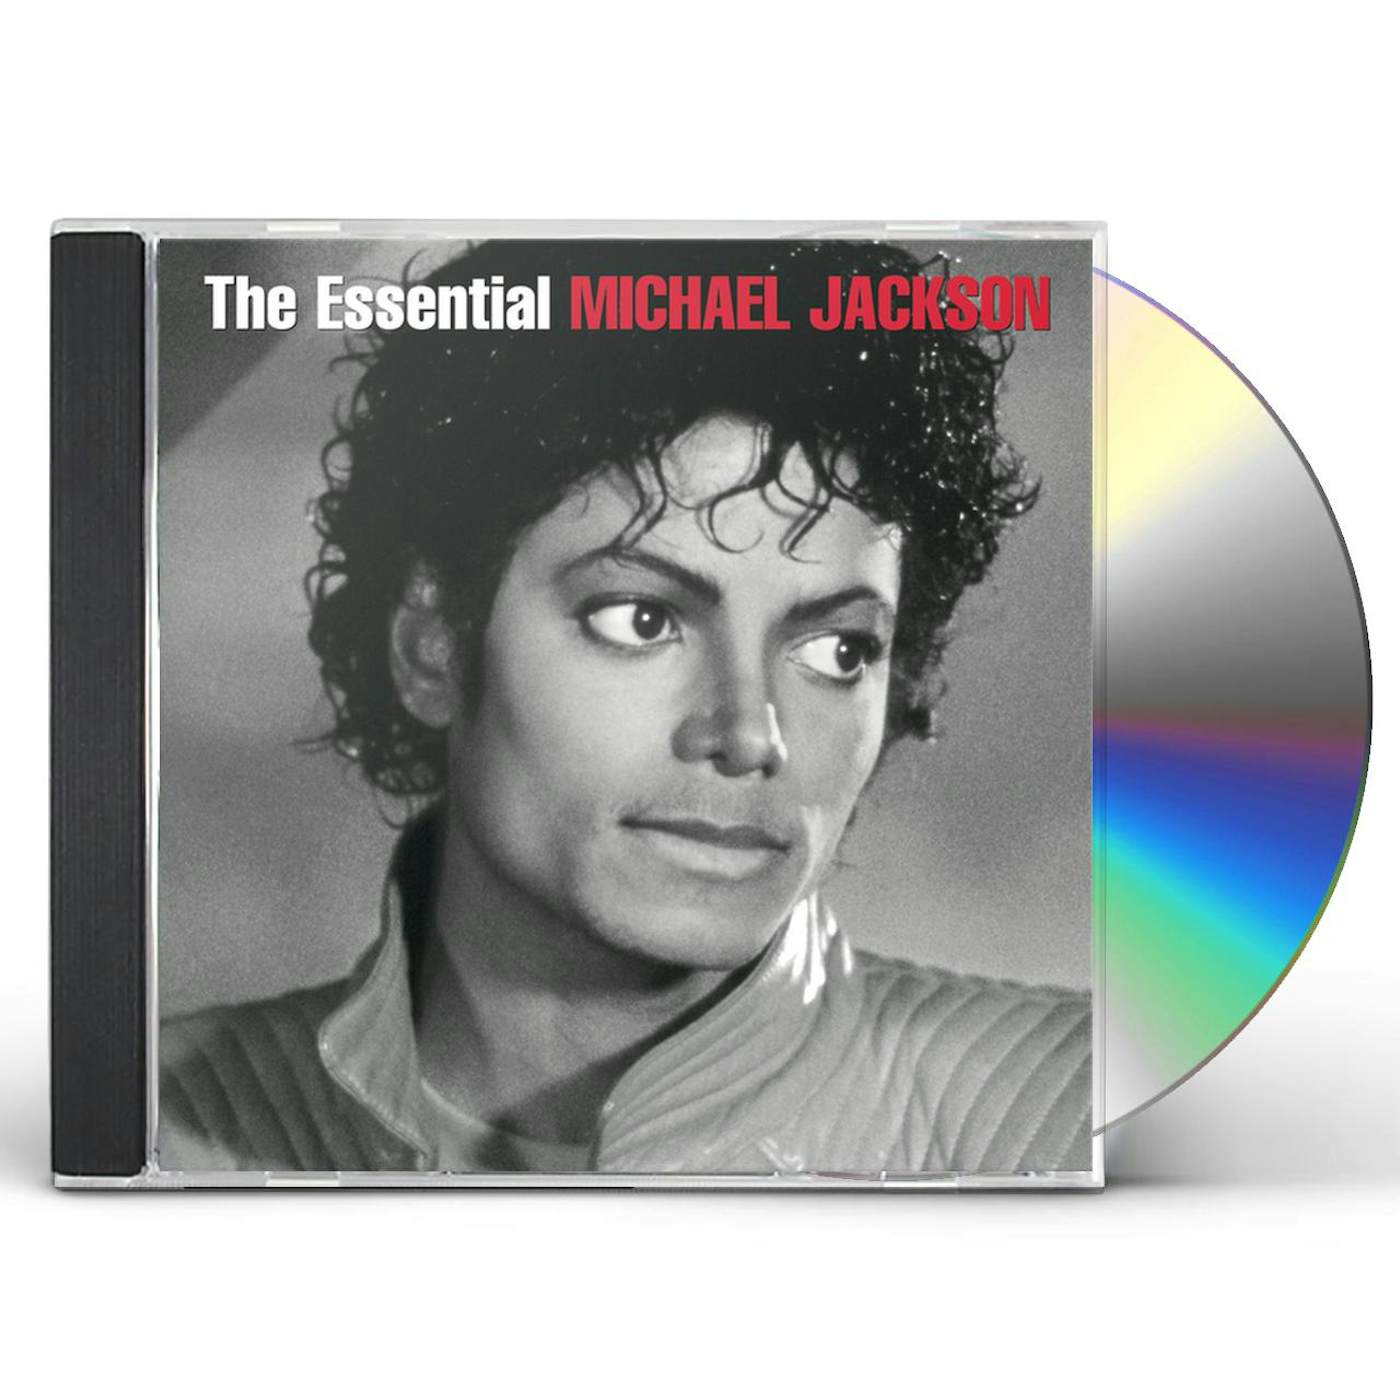 ESSENTIAL MICHAEL JACKSON CD